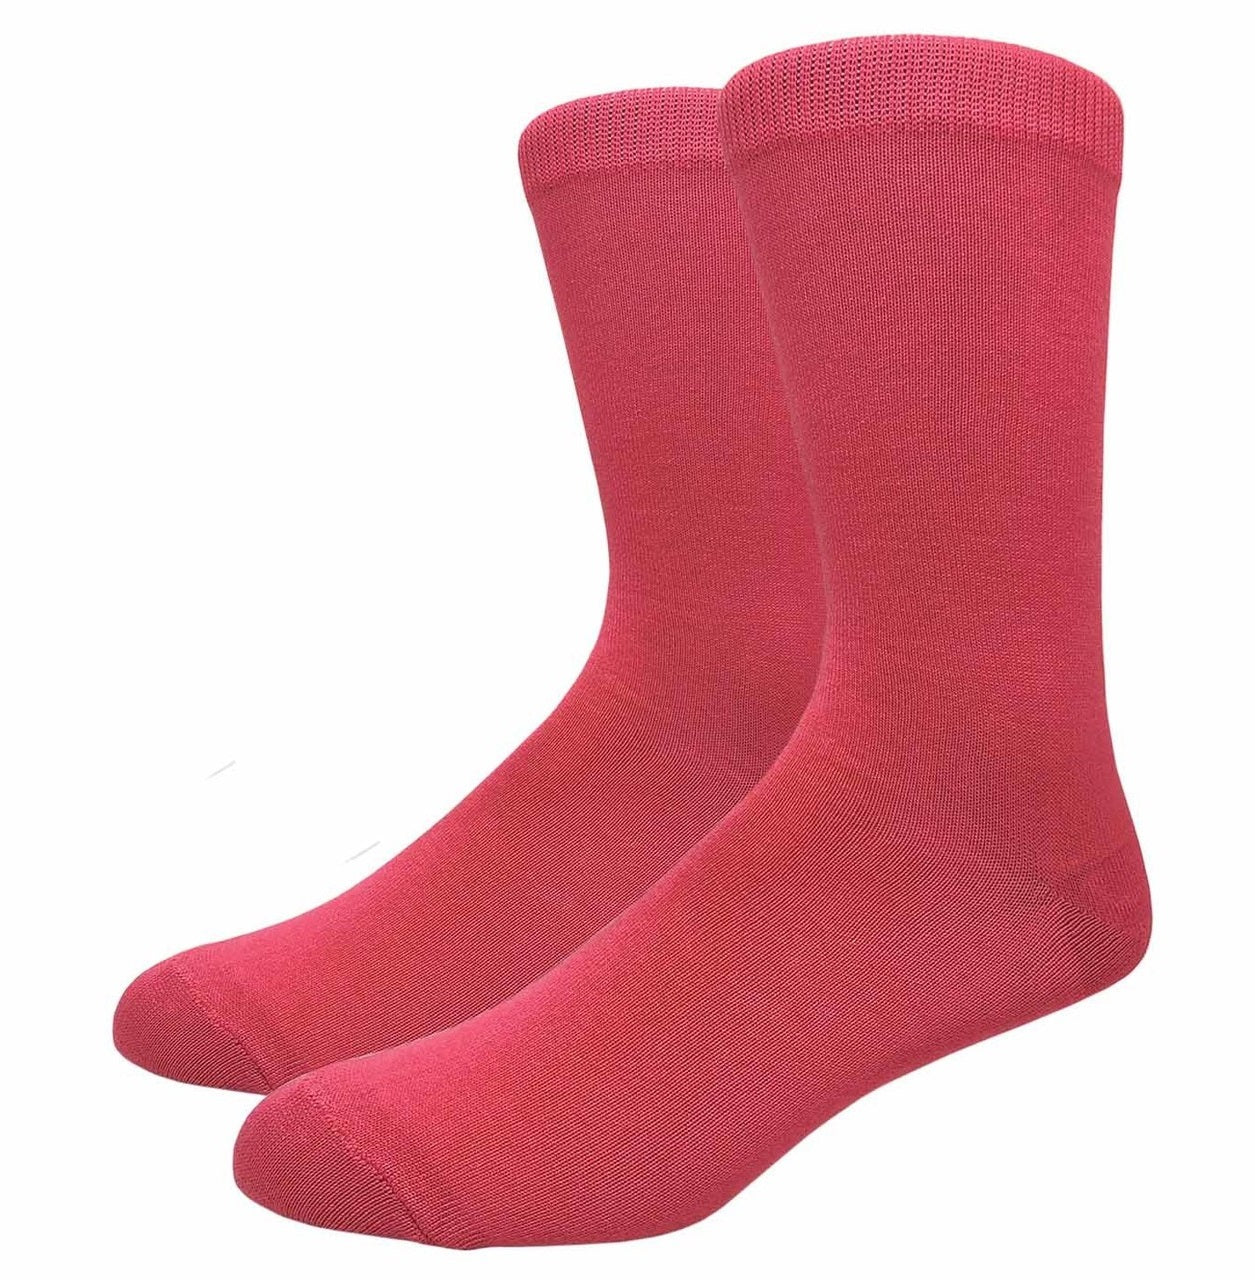 Solid Color Crew Cotton Dress Socks - Hot Pink